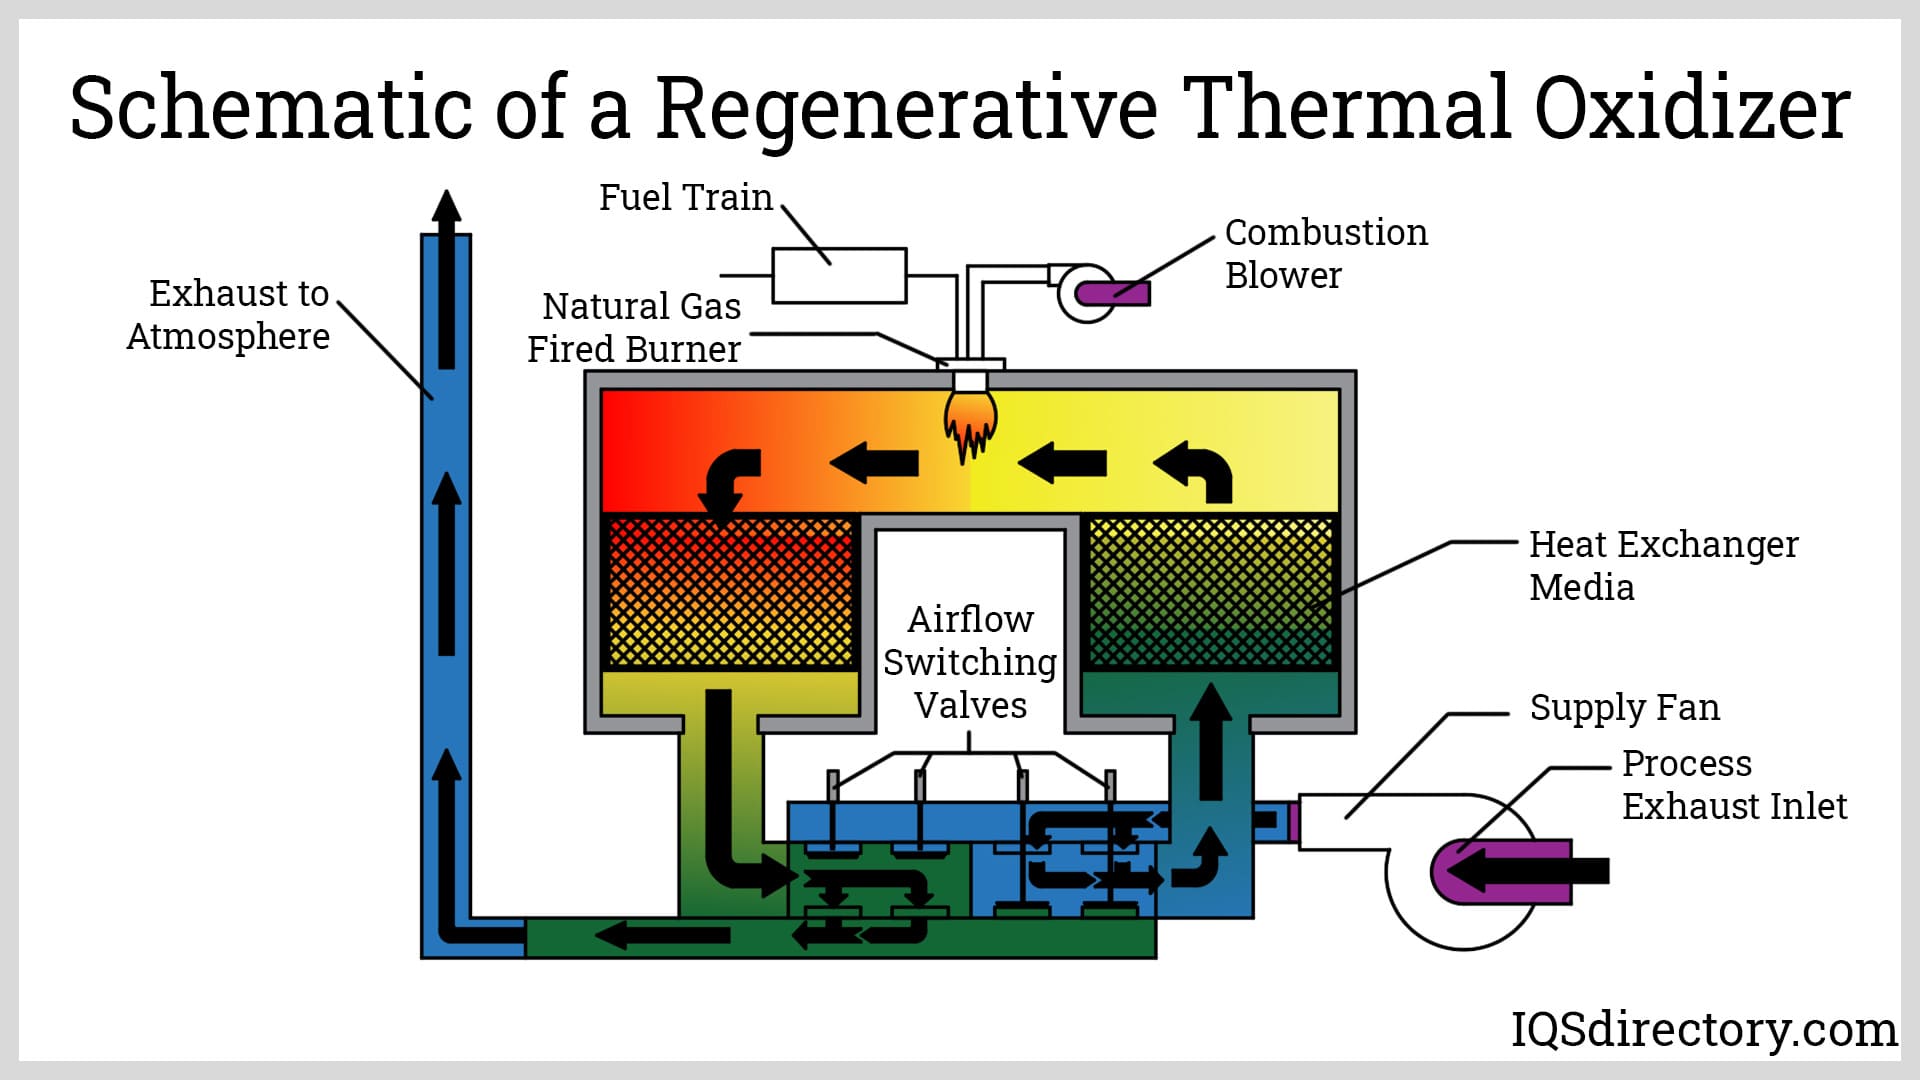 Schematic of a Regenerative Thermal Oxidizer